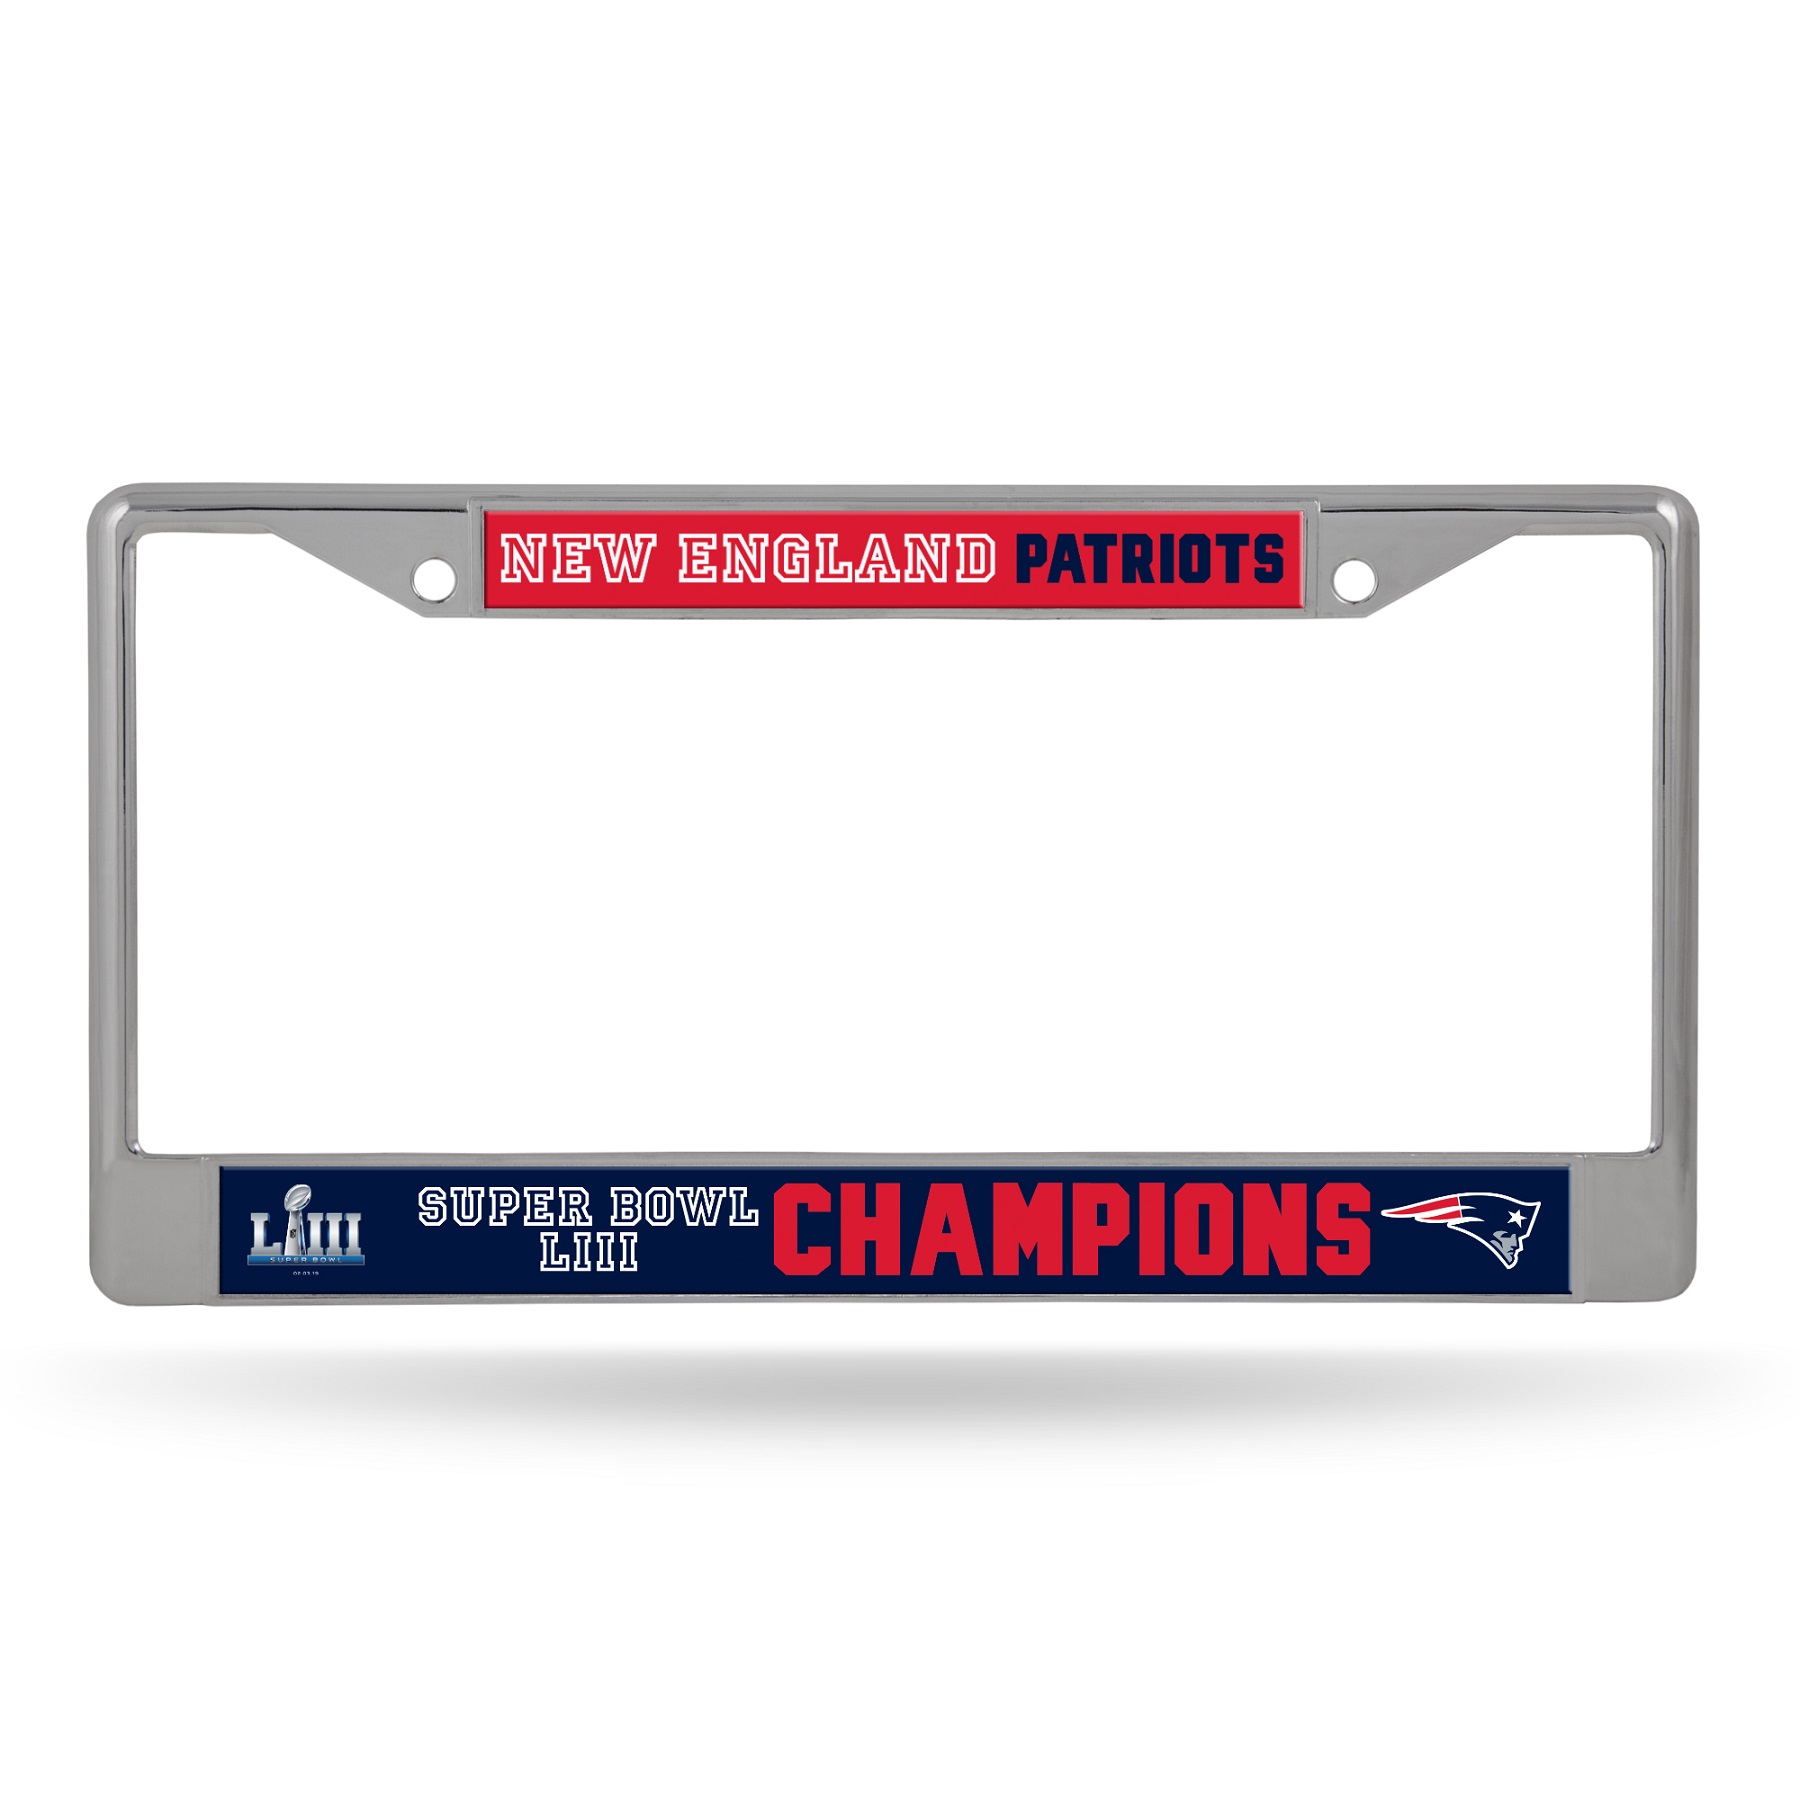 NEW England Patriots Super Bowl Champs Chrome License Plate Frame